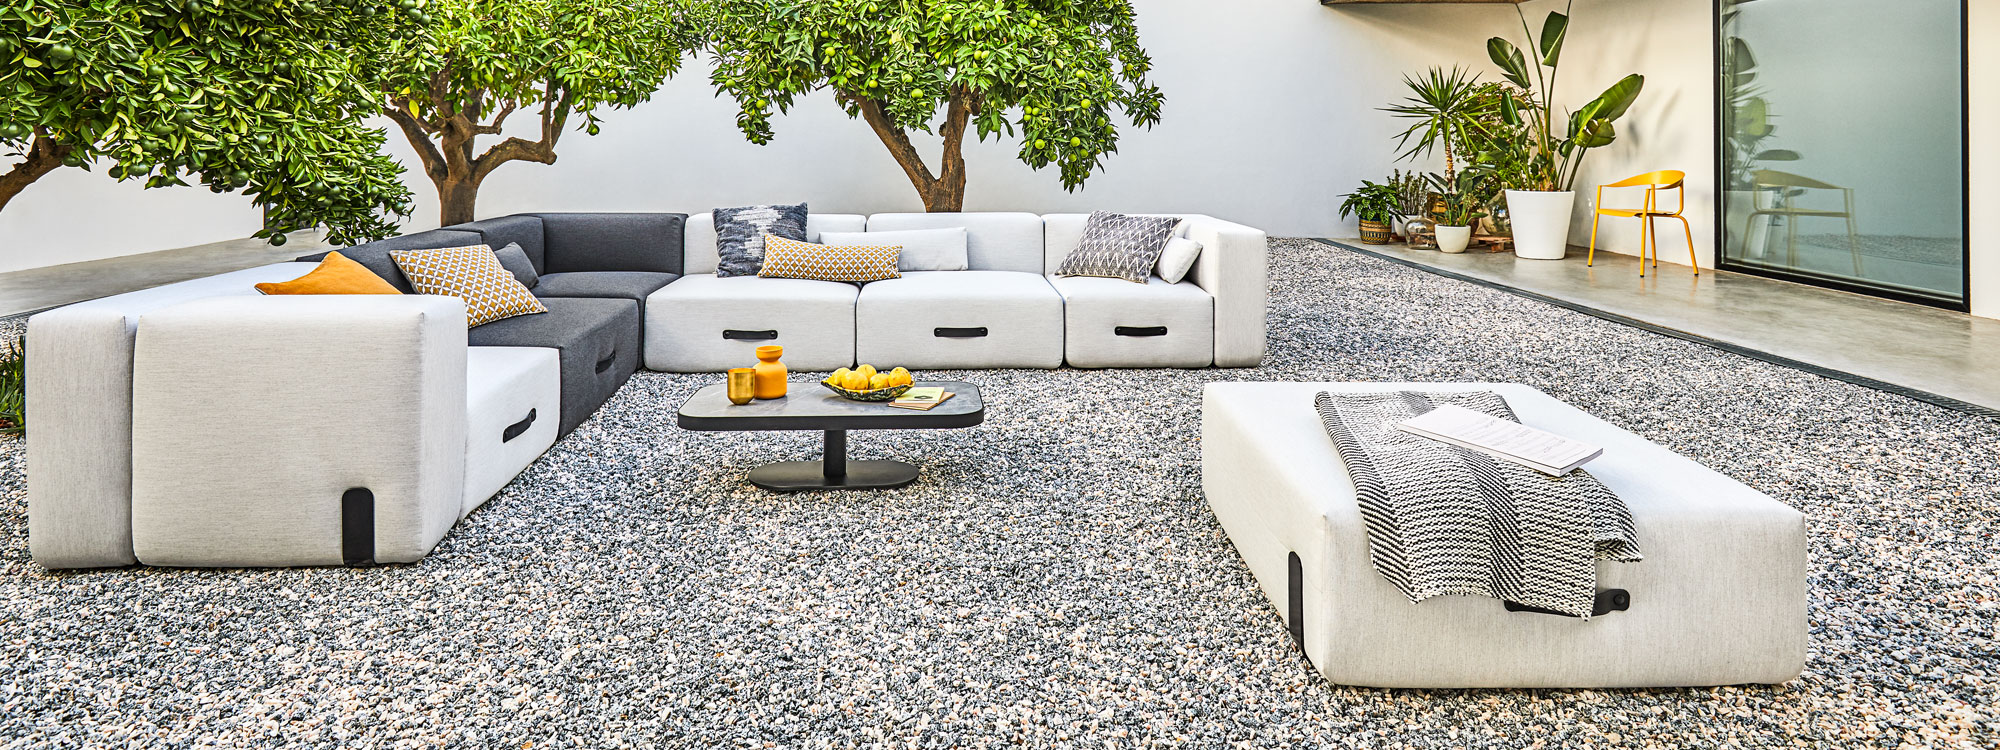 Image of Grey & Anthracite Miami outdoor corner sofa on gravel courtyard beneath orange trees